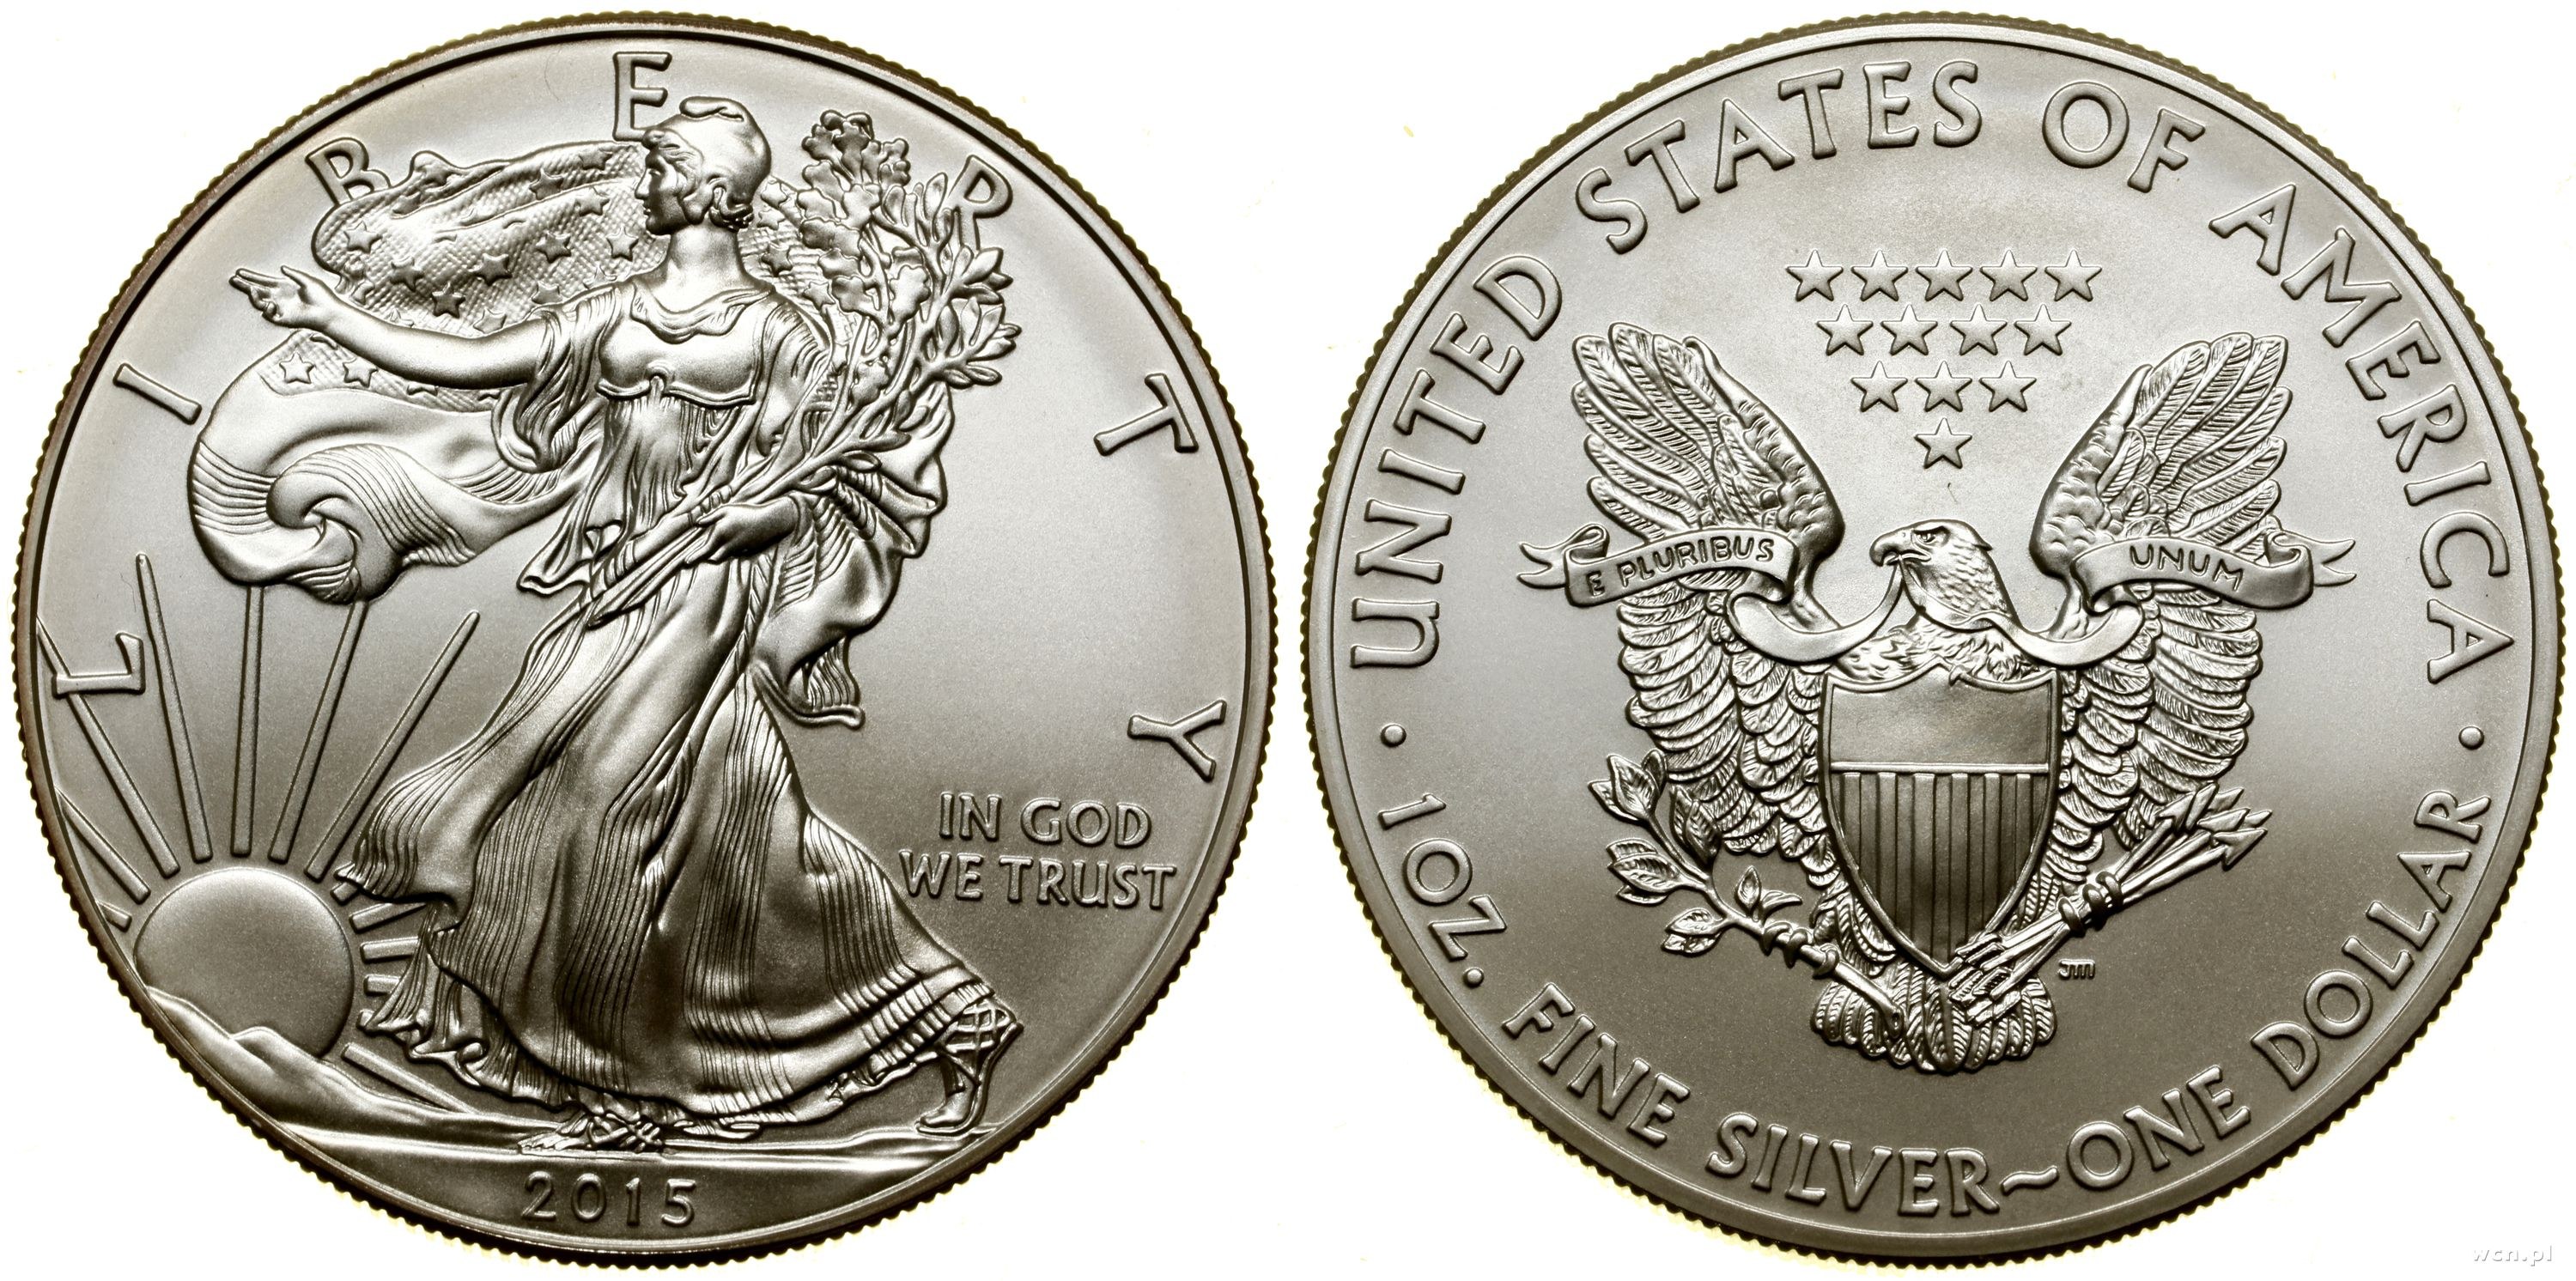 1 серебряный доллар. Монета USA Liberty 2001. American Eagle монета. Серебряная монета 1 доллар Либерти.